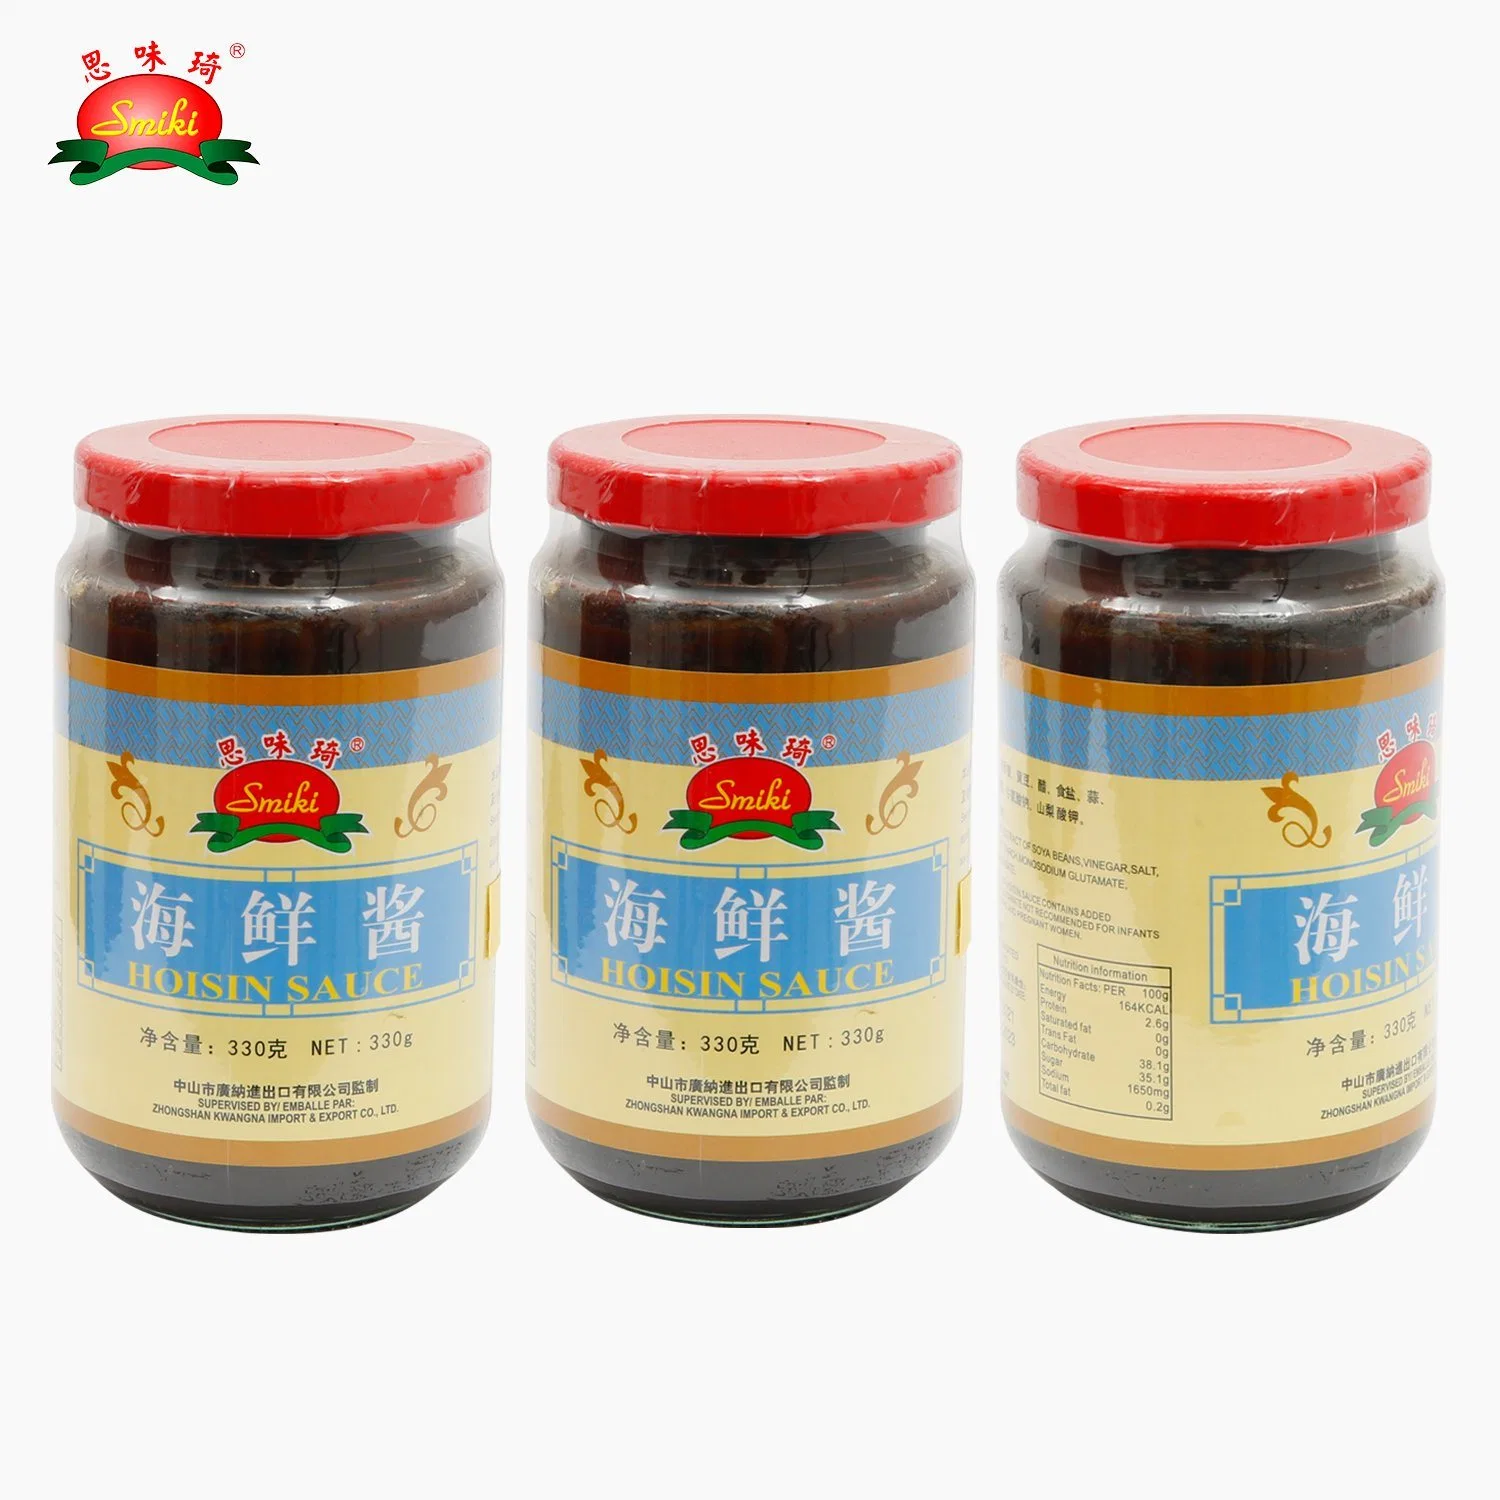 Seasoning Sauce for Cooking Seafood/330g Hoisin Sauce/Seafood Sauce Manufacturer in China